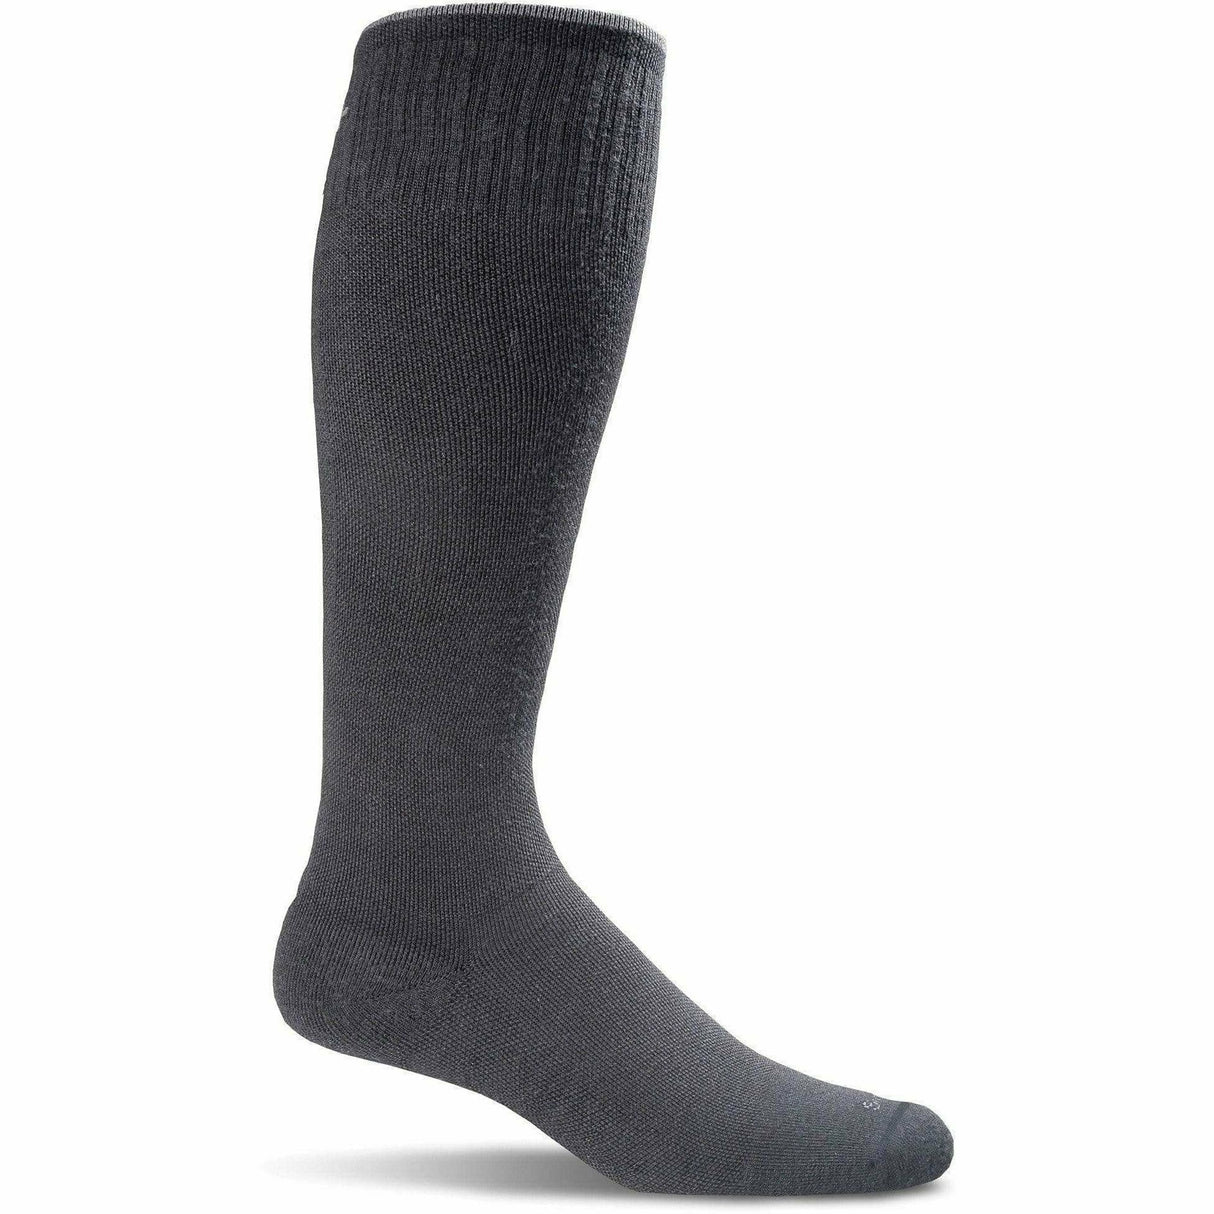 Sockwell Womens Twister Firm Compression Knee High Socks  -  Small/Medium / Black Solid